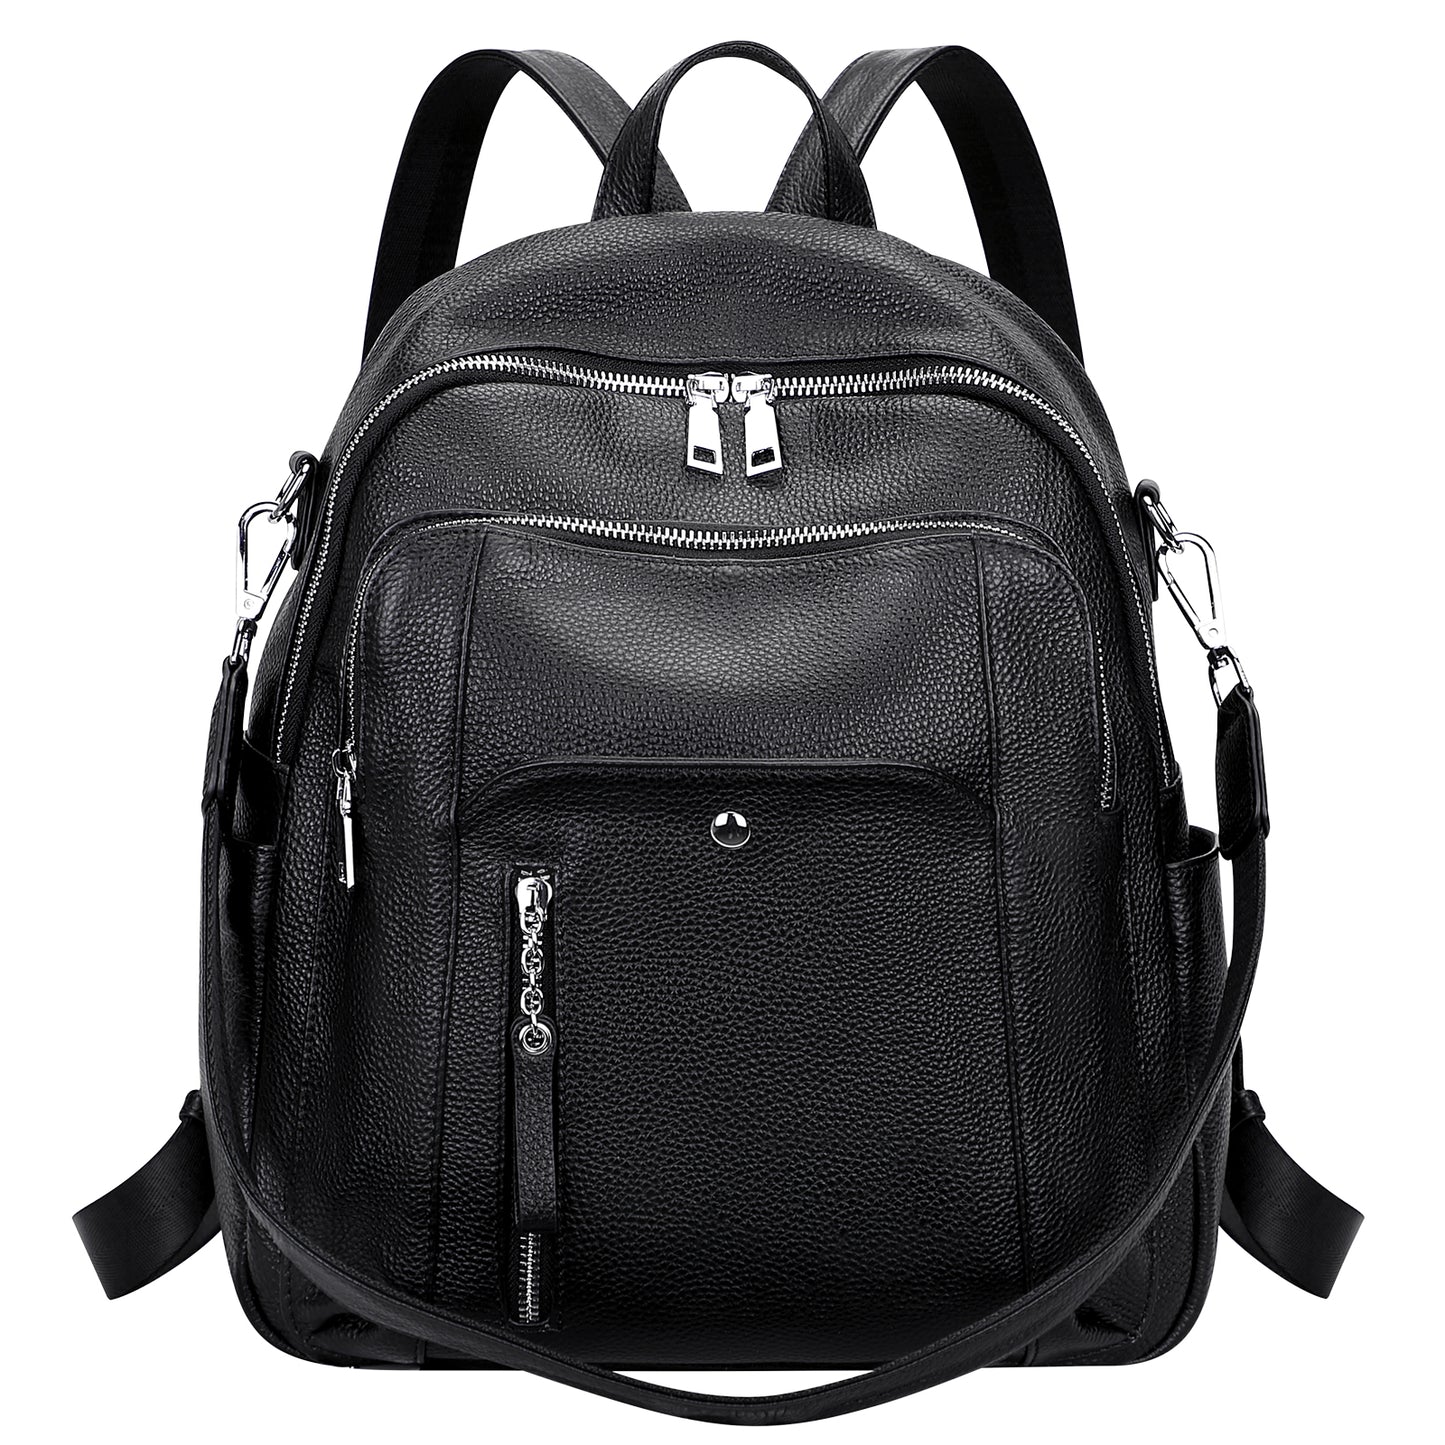 ALTOSY Fashion Leather Backpack